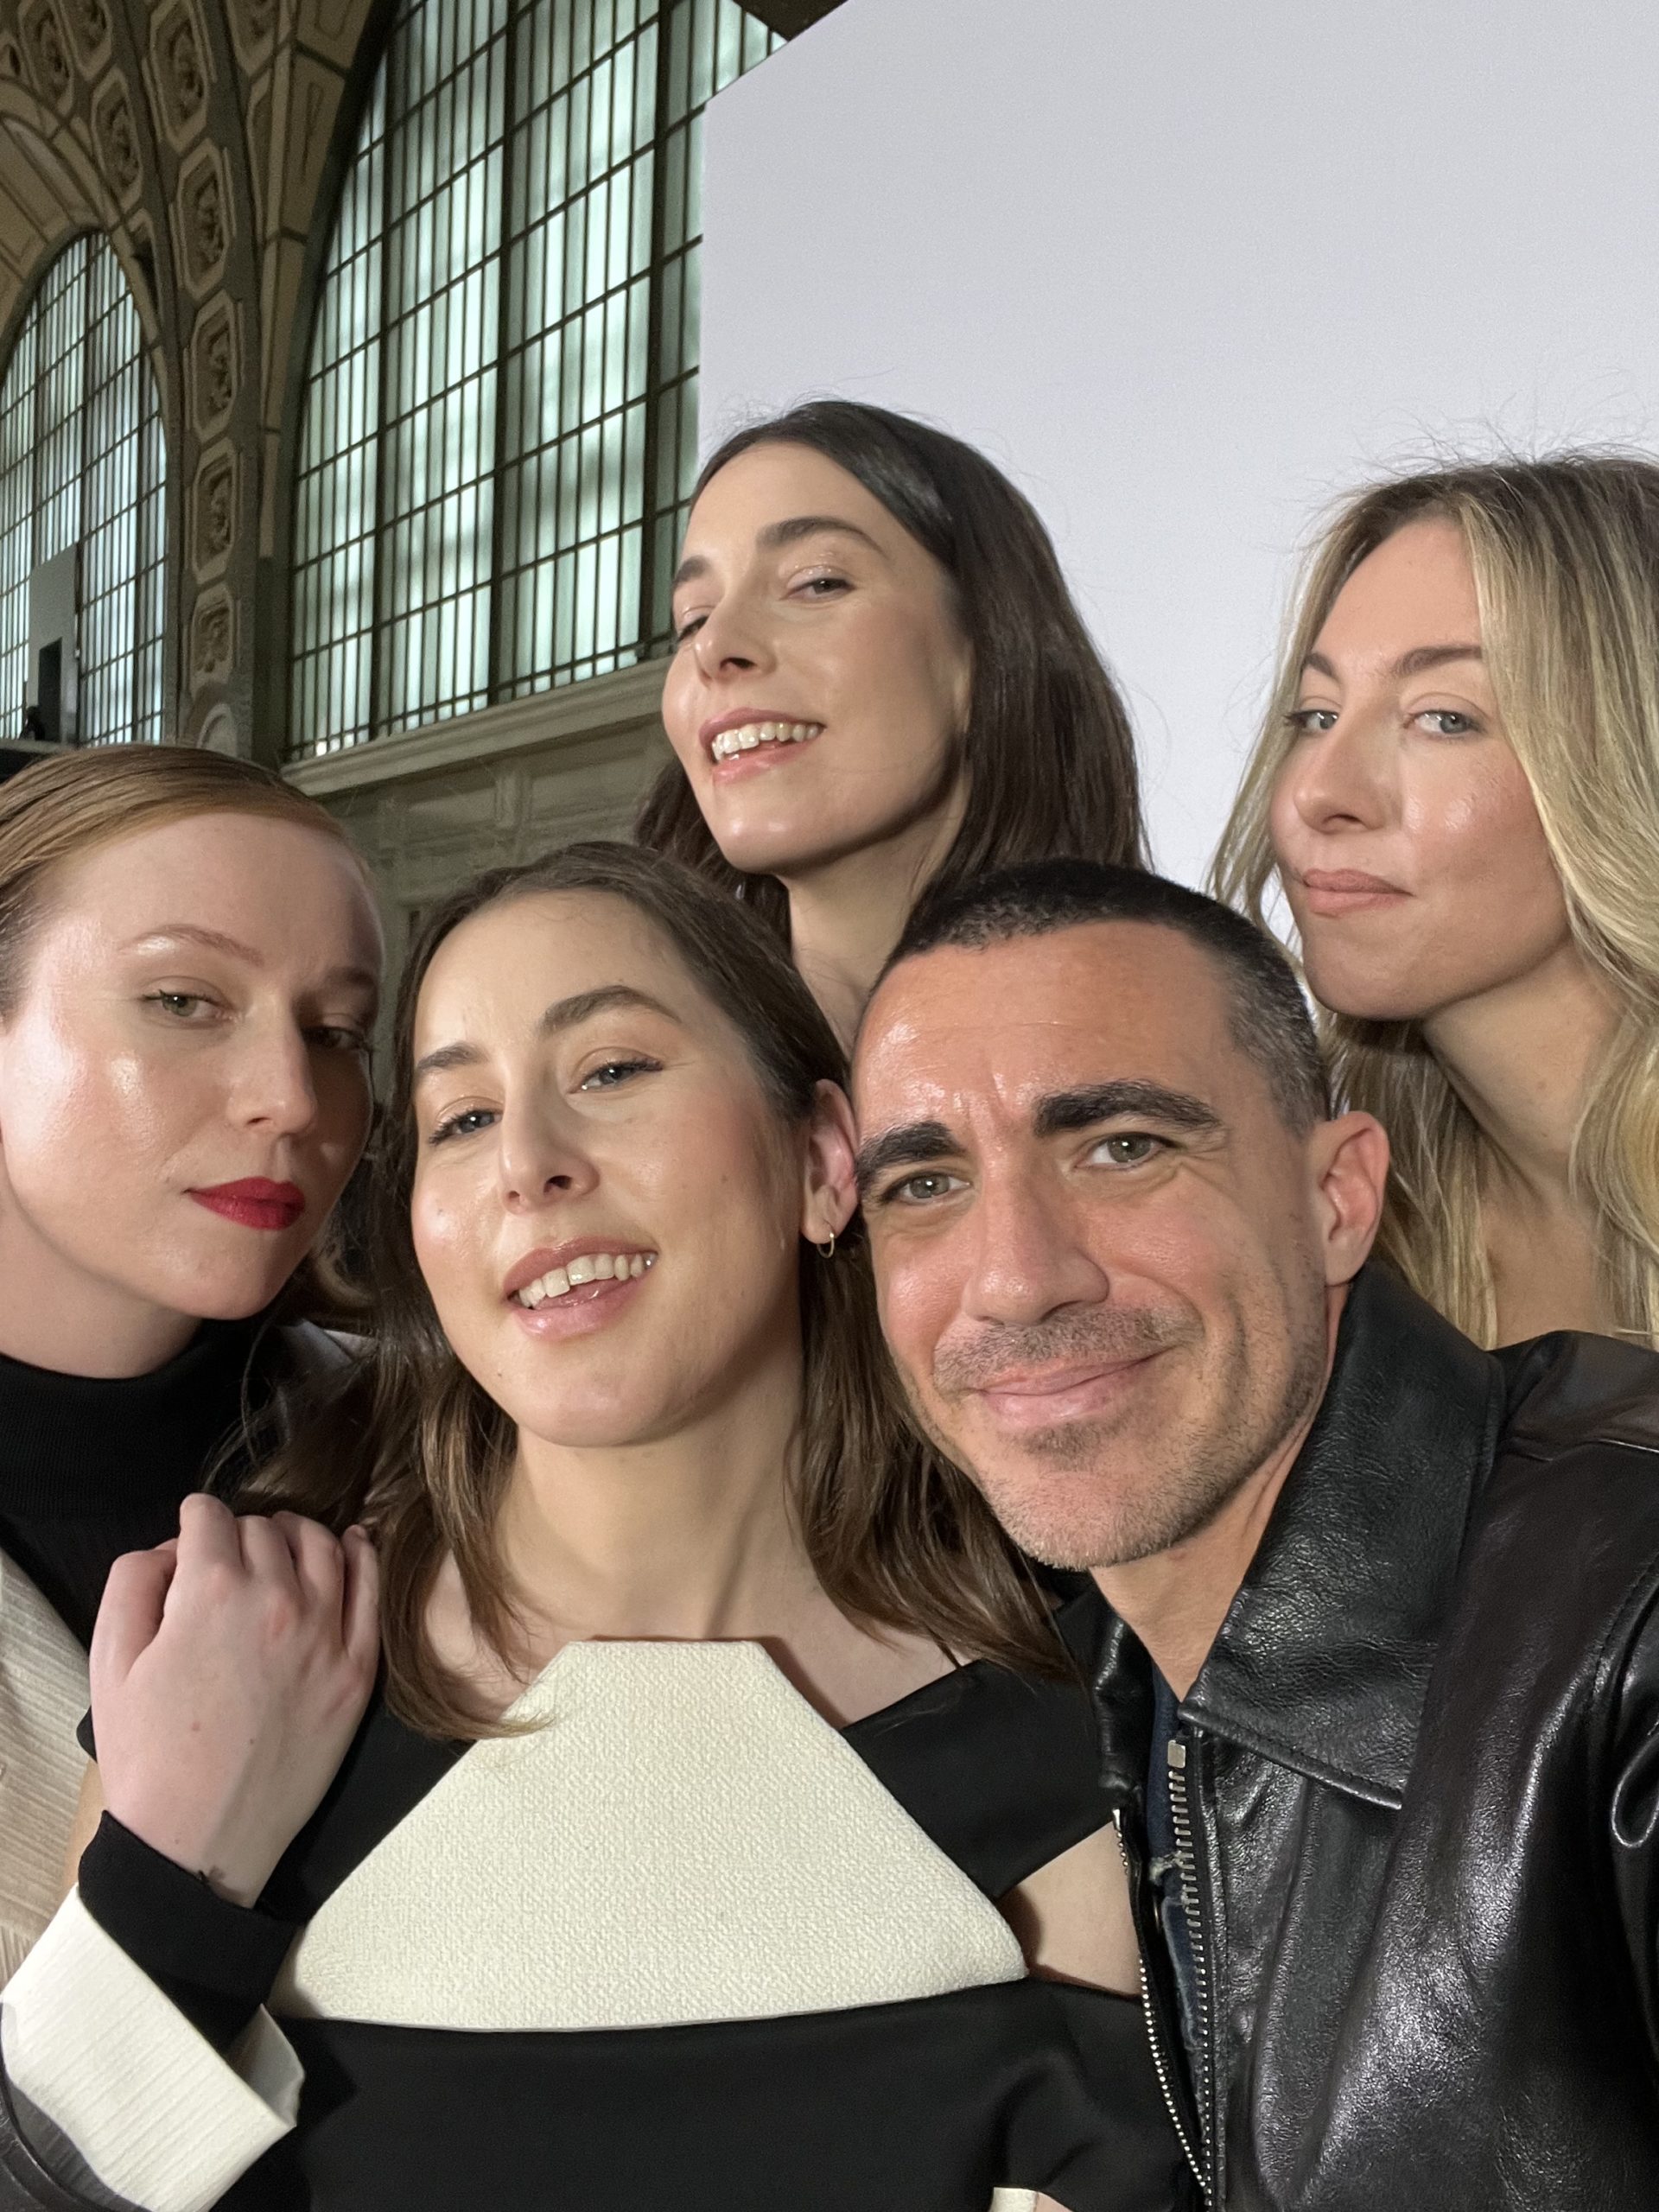 Meet the New Model Faces of Louis Vuitton